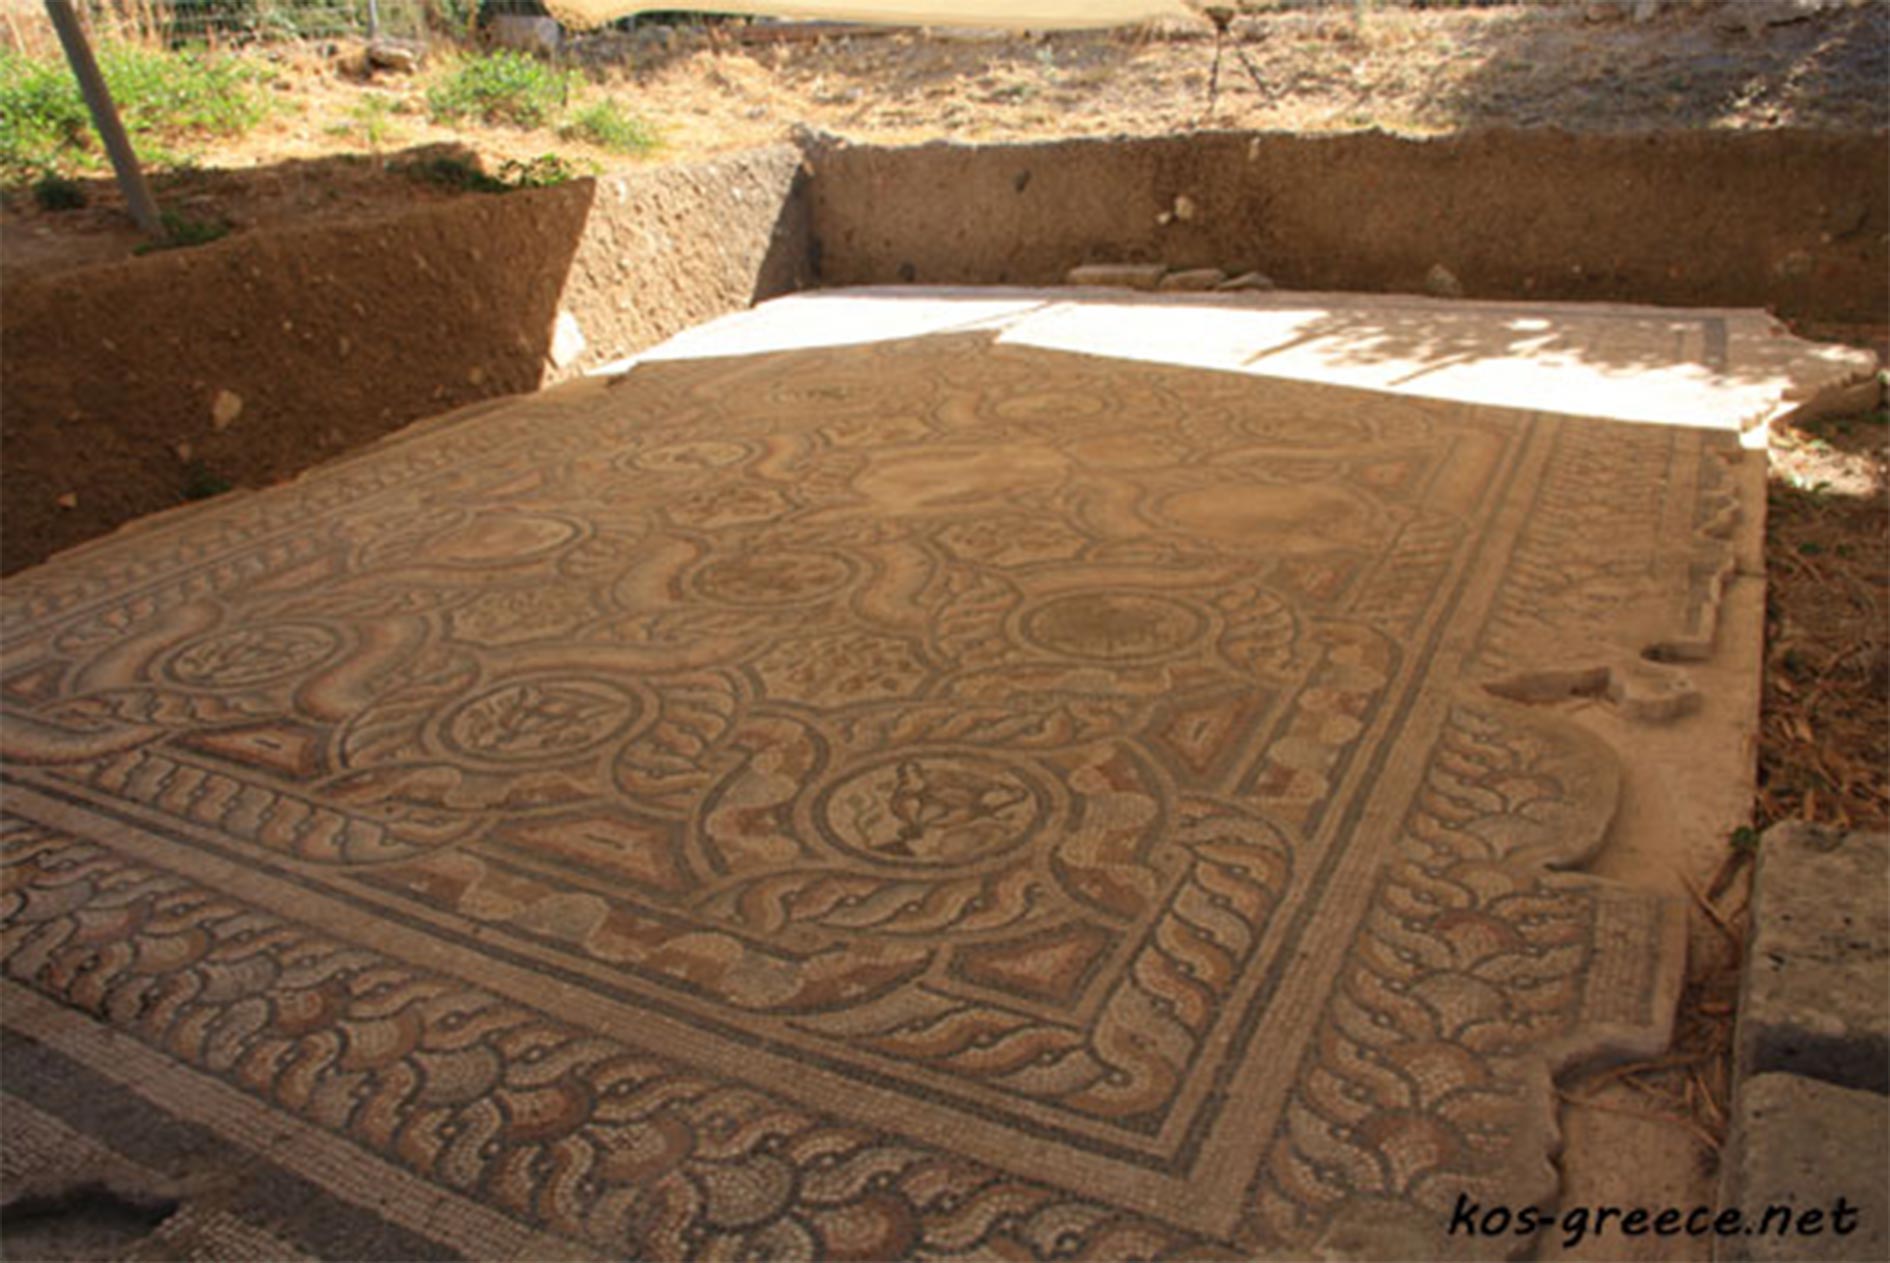 Ancient Roman mosaics